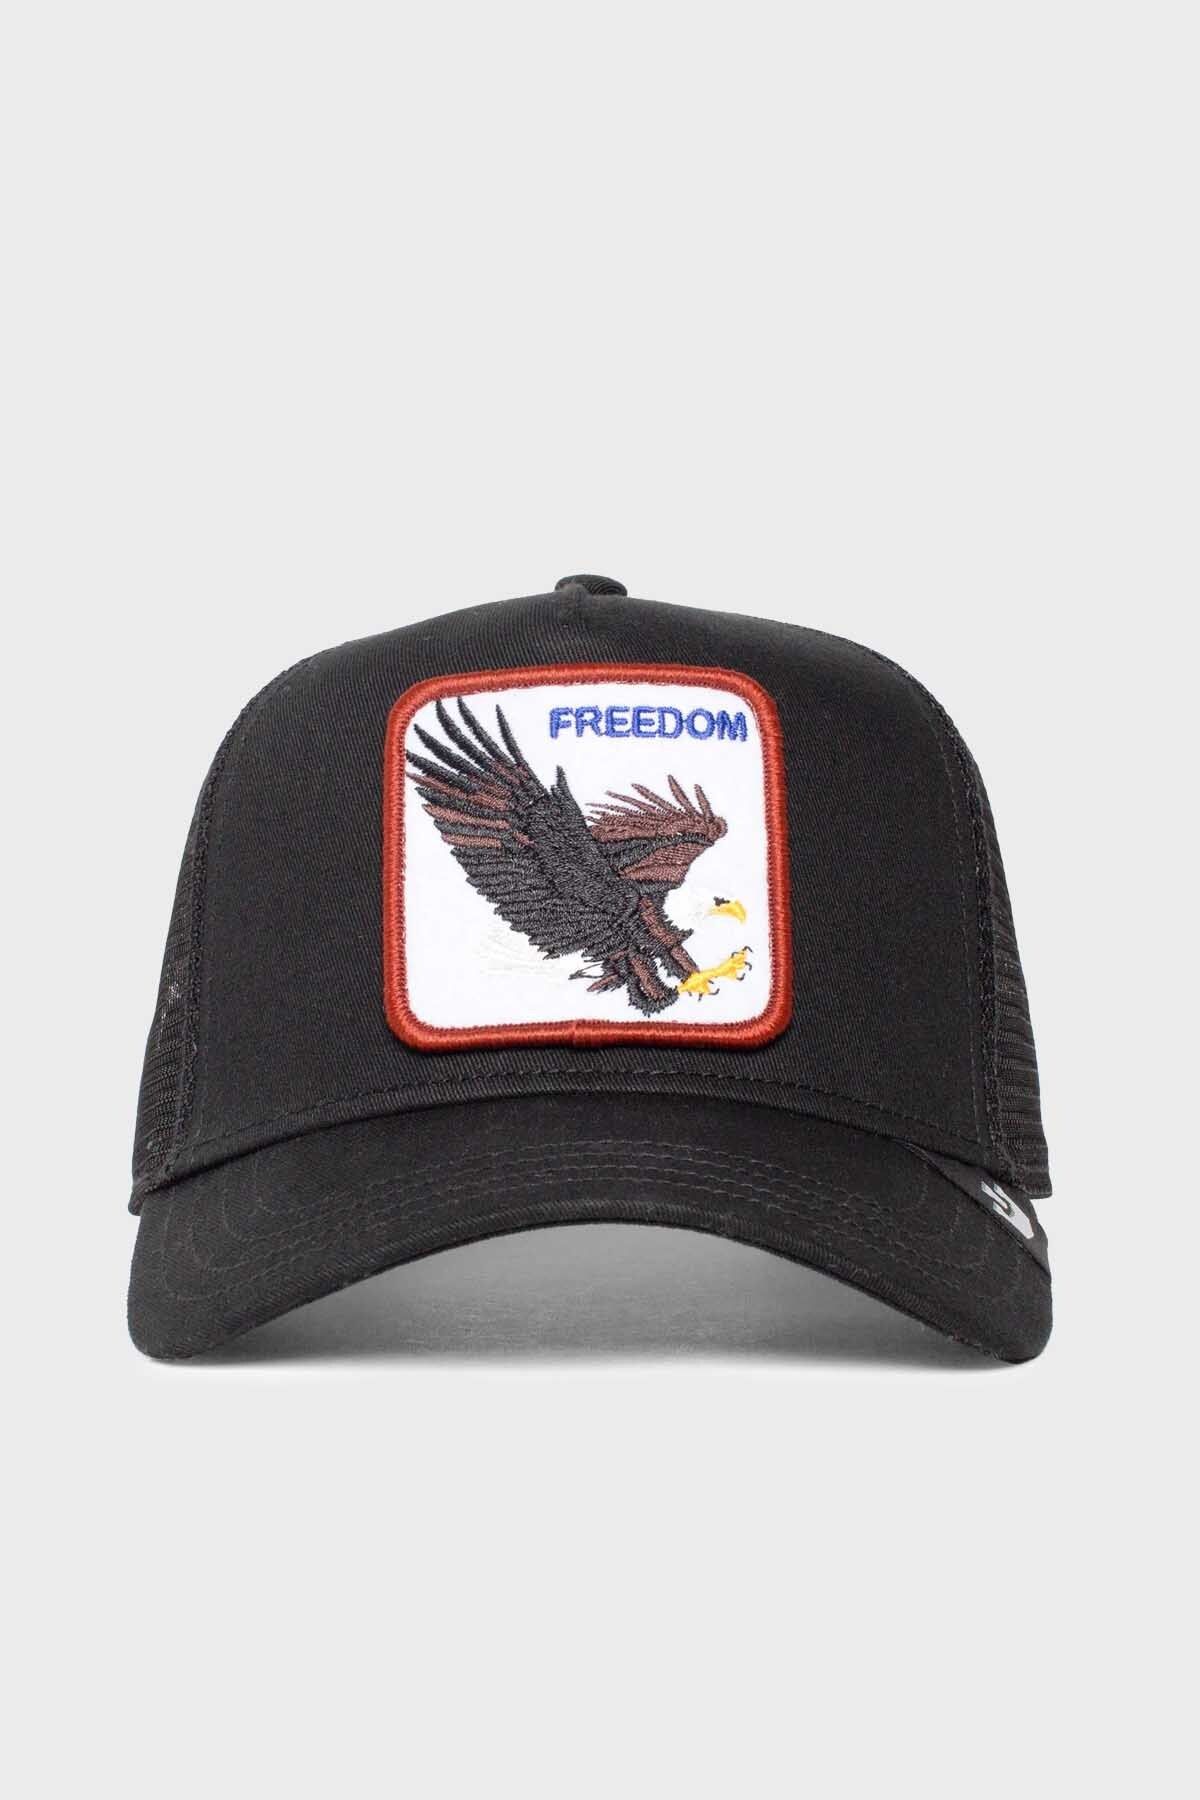 Goorin Bros 101-0384 The Freedom Eagle File Detaylı Animal Desenli Şapka Unisex Şapka 1010384